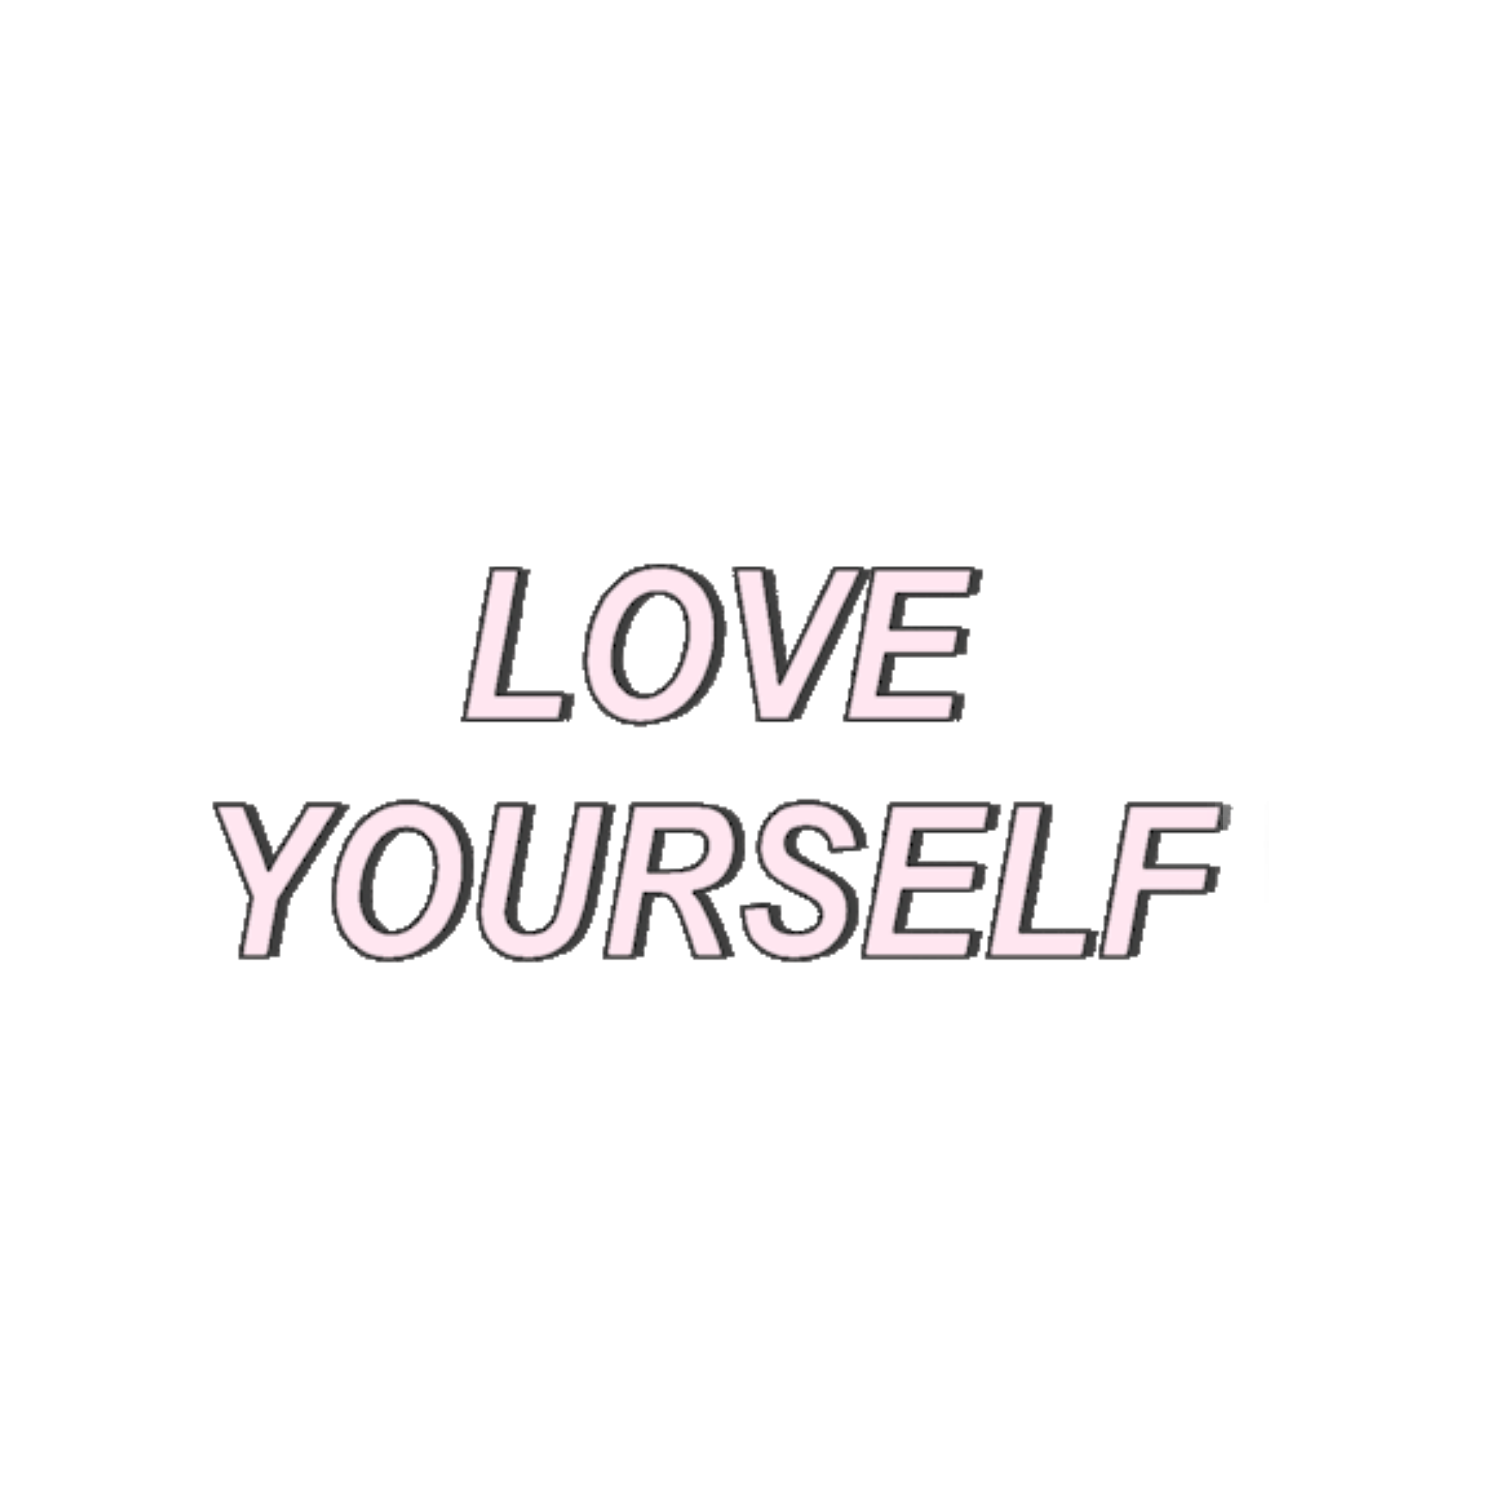 Love yourself текст. Love yourself. Love yourself надпись. БТС на прозрачном фоне. Надпись BTS на прозрачном фоне.